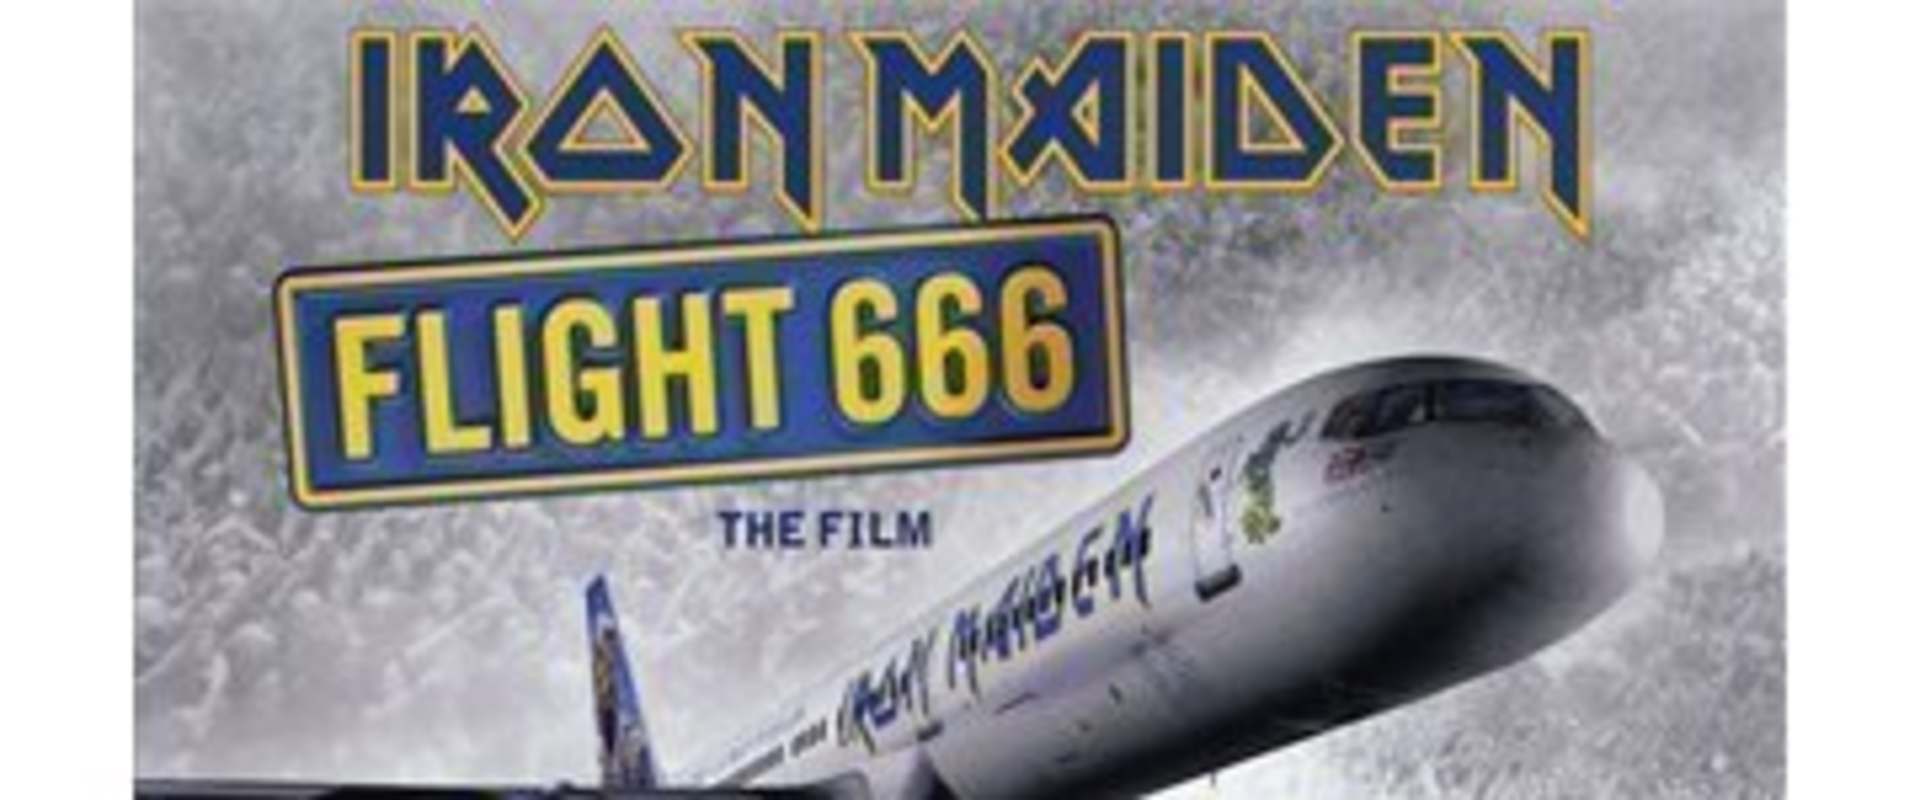 Iron Maiden: Flight 666 background 2